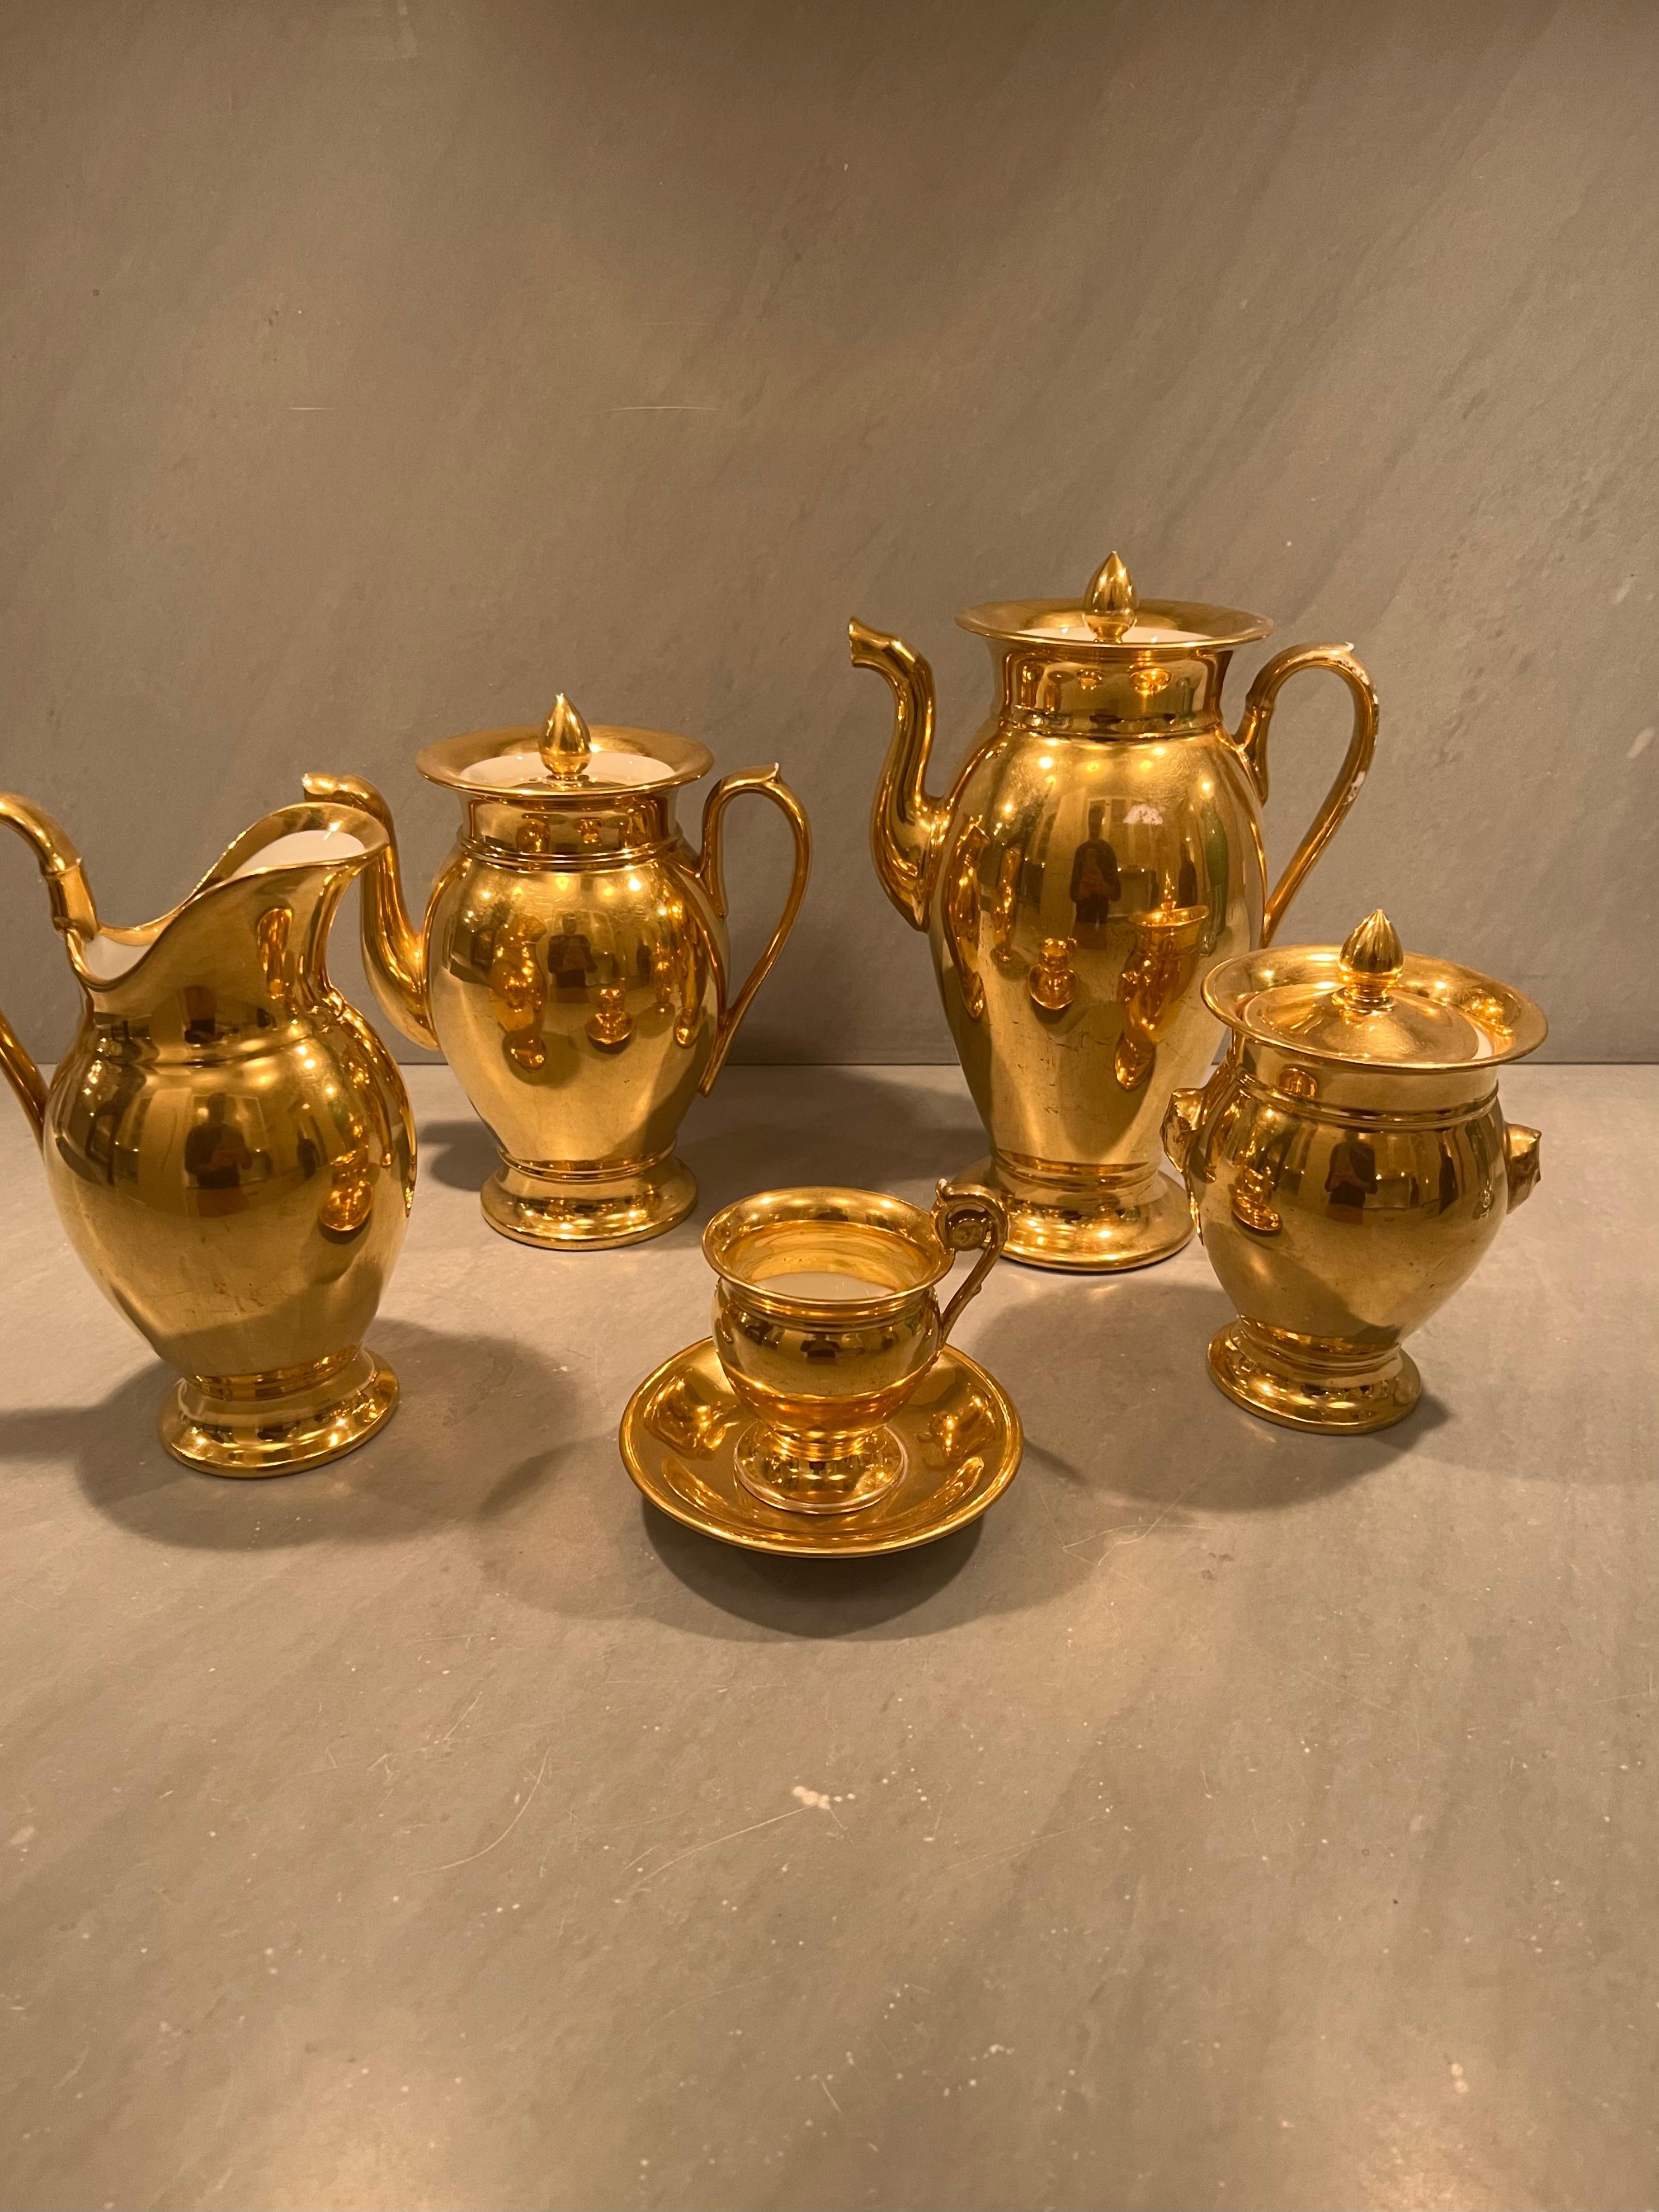 A vintage Paris Gold porcelain coffee and tea set. France, circa 1940. Unmarked. 

Includes the following 28 (twenty-eight) pieces:
1 Coffee pot
1 Tea pot
1 Creamer
1 Sugar jar
12 cups
12 saucers